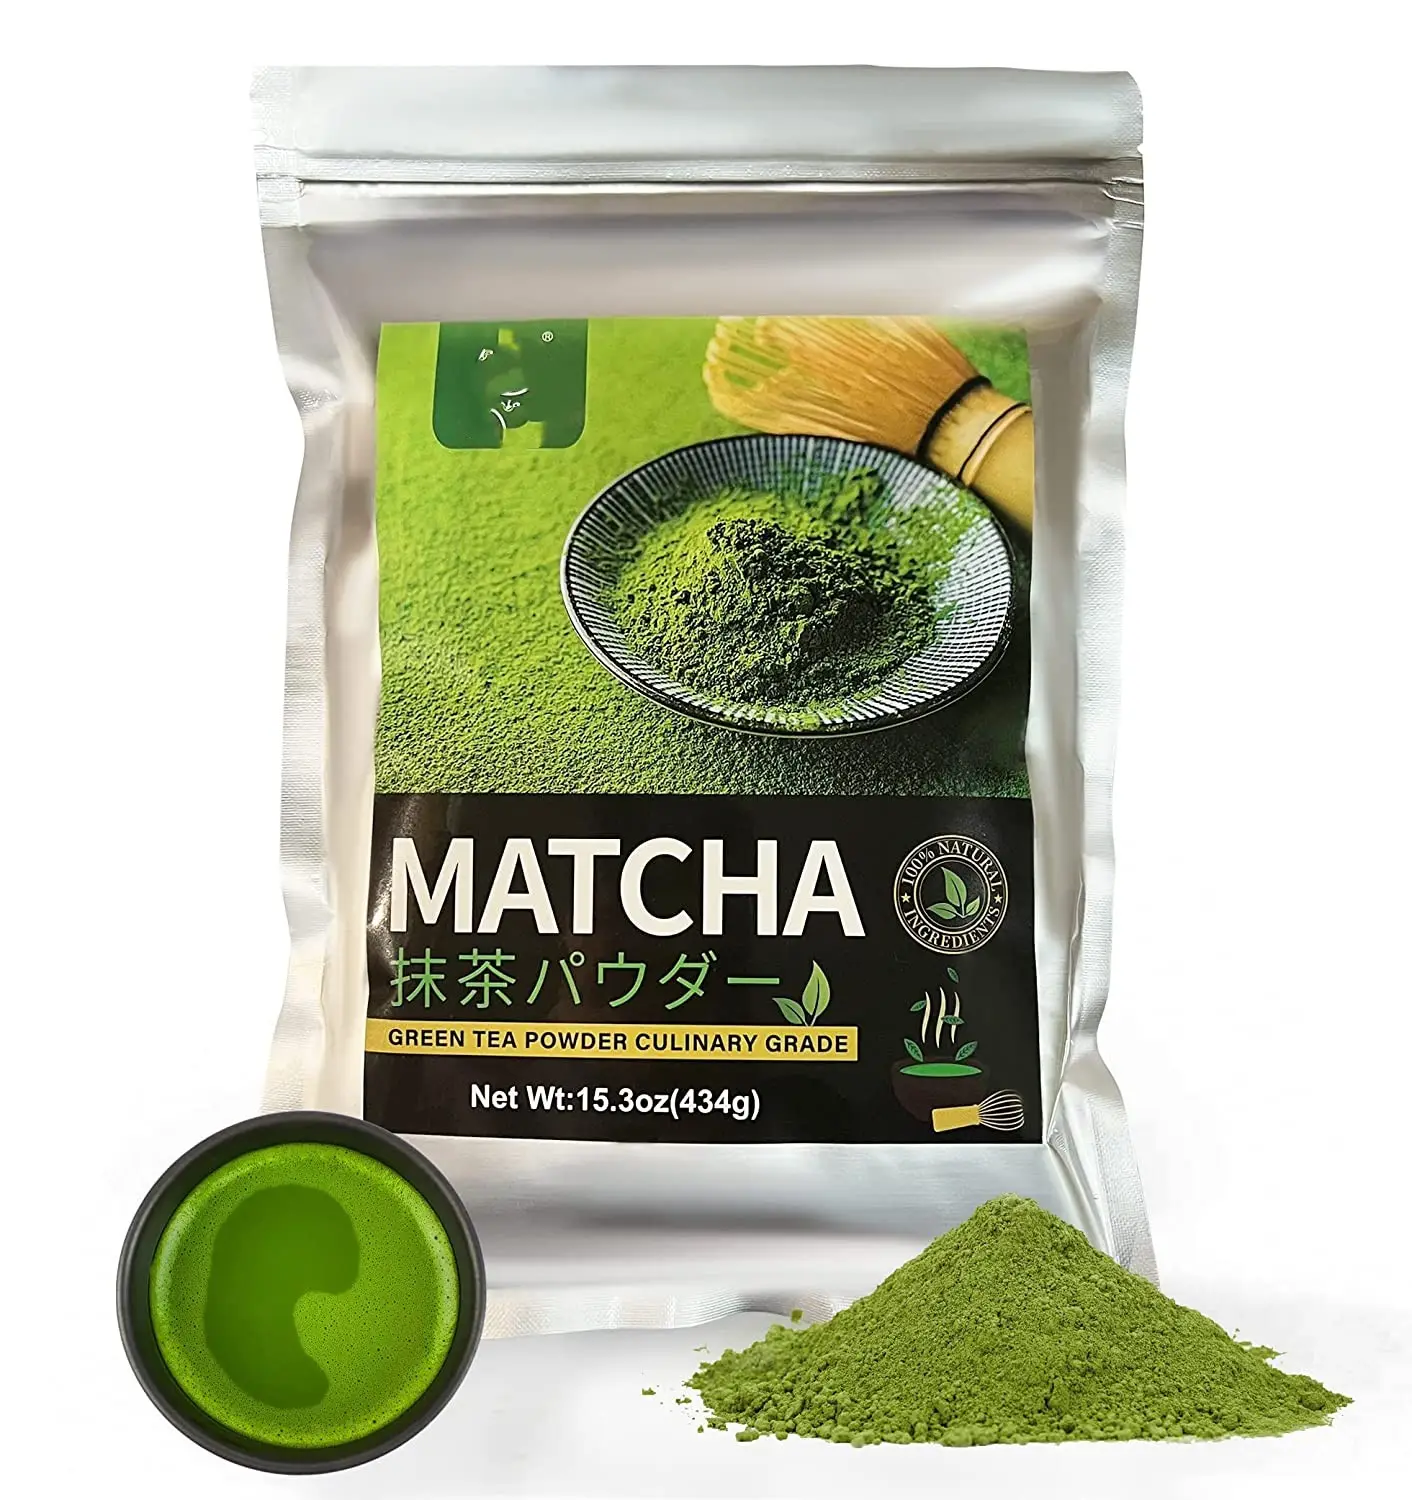 Bubuk Matcha upacara Label pribadi, bubuk teh hijau Matcha 100% murni